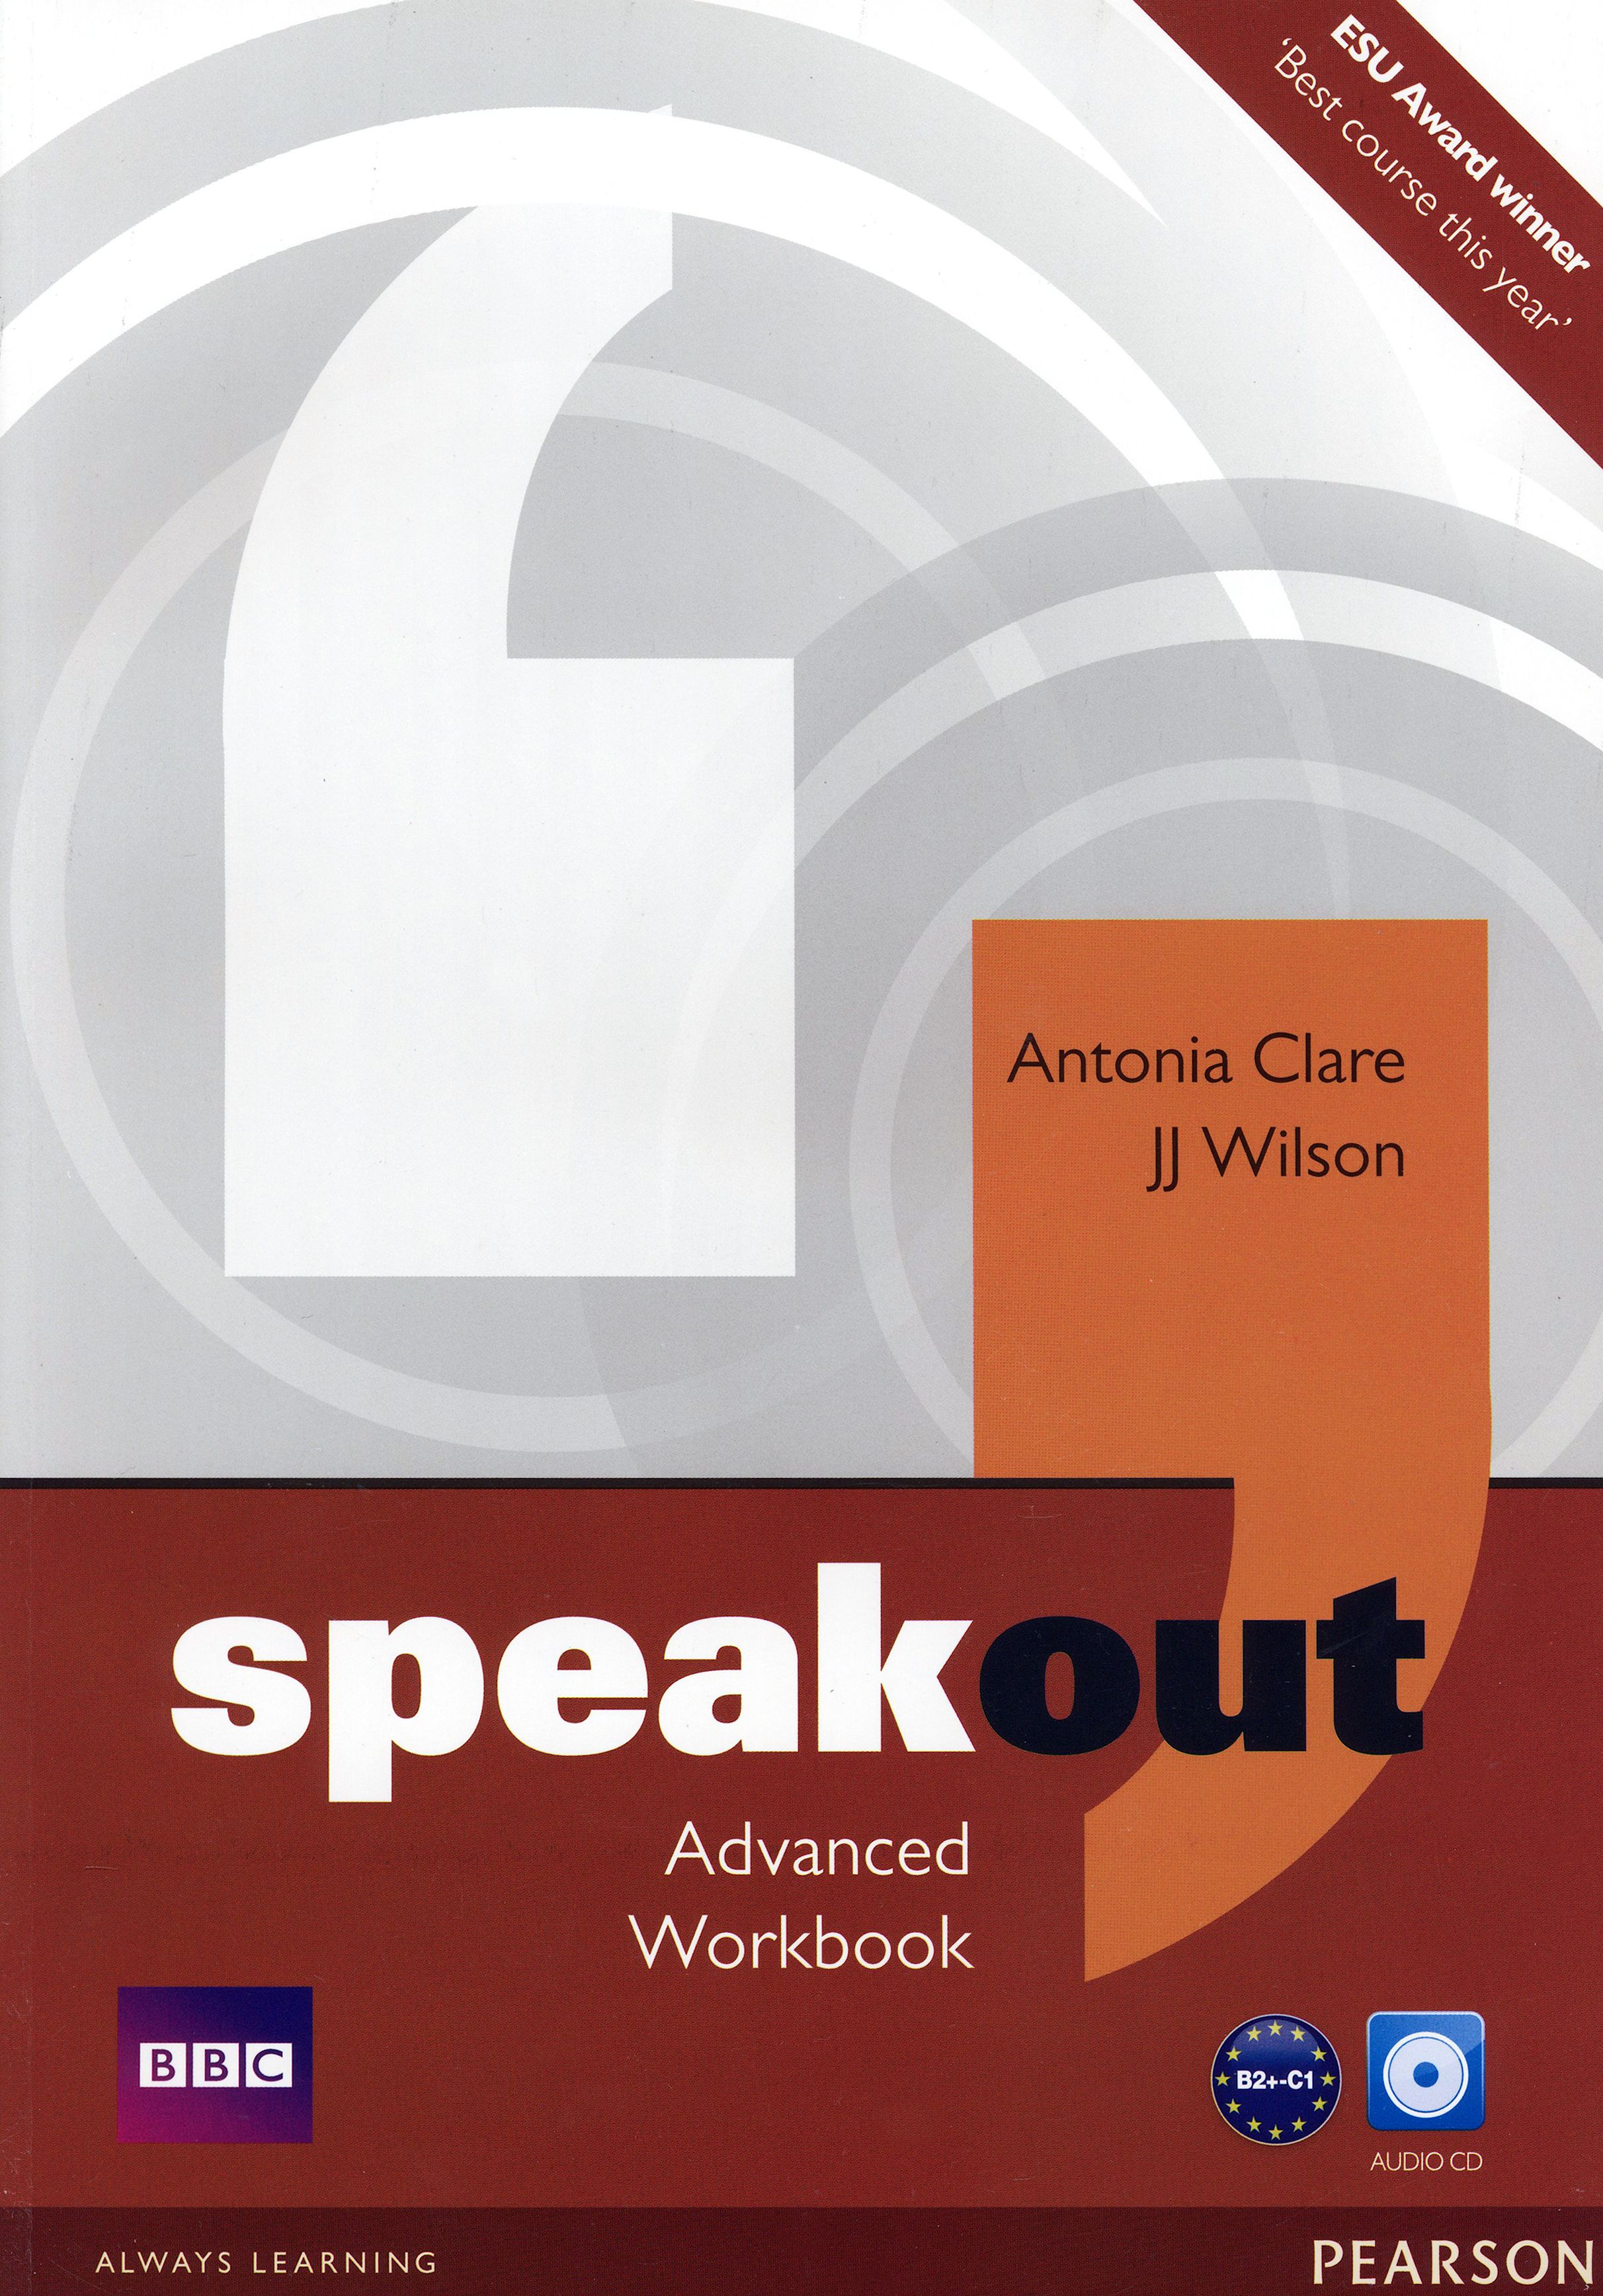 Speakout Elementary Workbook with Key. Advanced Workbook. Advanced Workbook Keys. Speakout Elementary. Speak out elementary